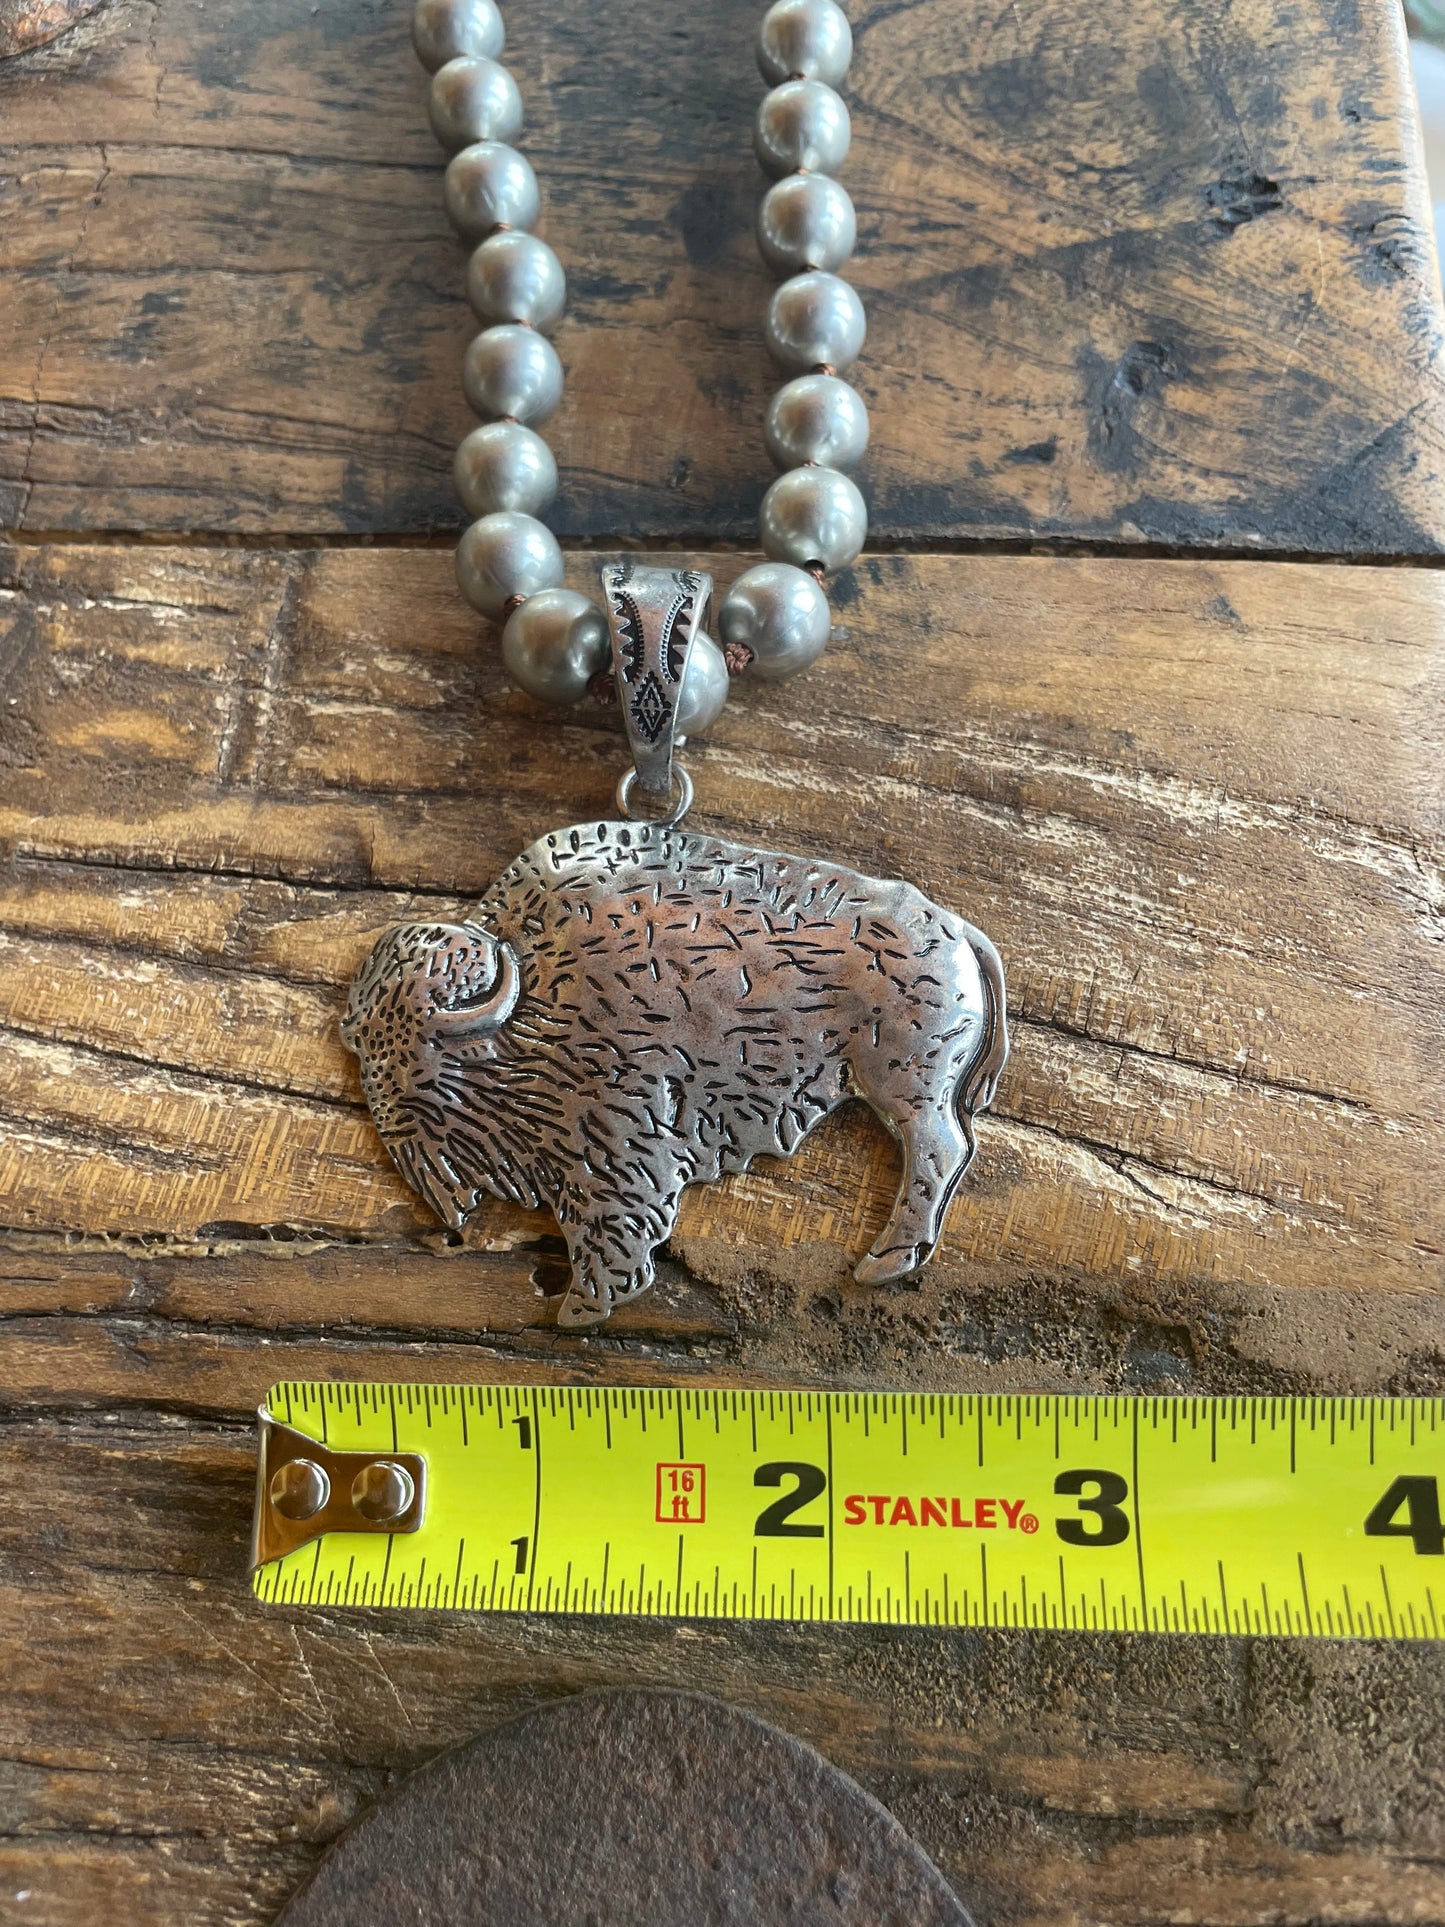 Buffalo Necklace